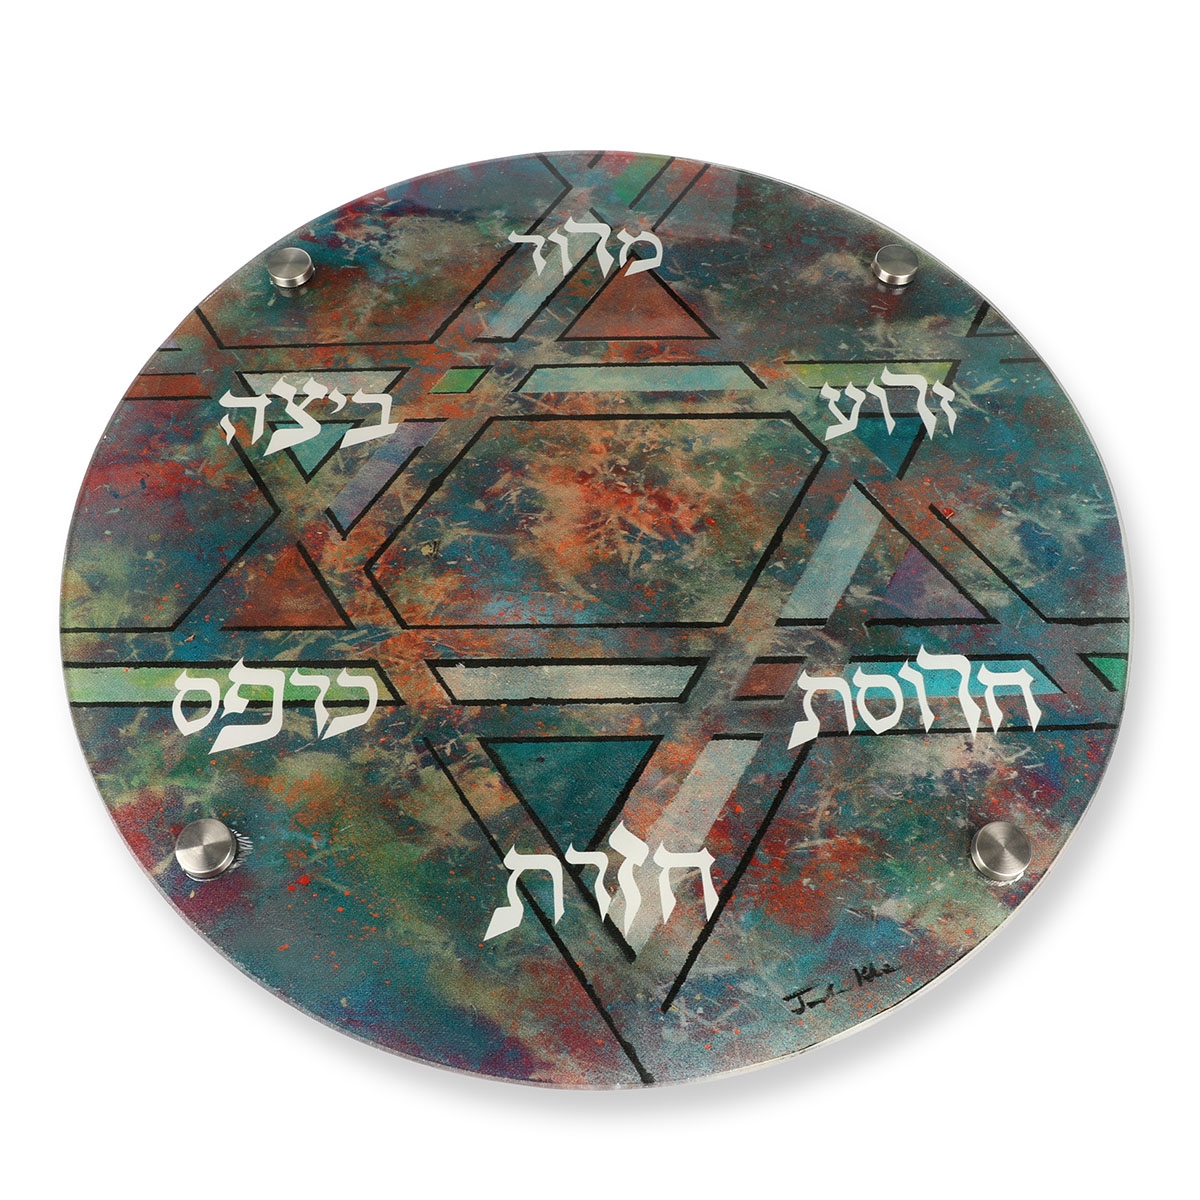 Seder Plate With Star of David Design By Jordana Klein - 1